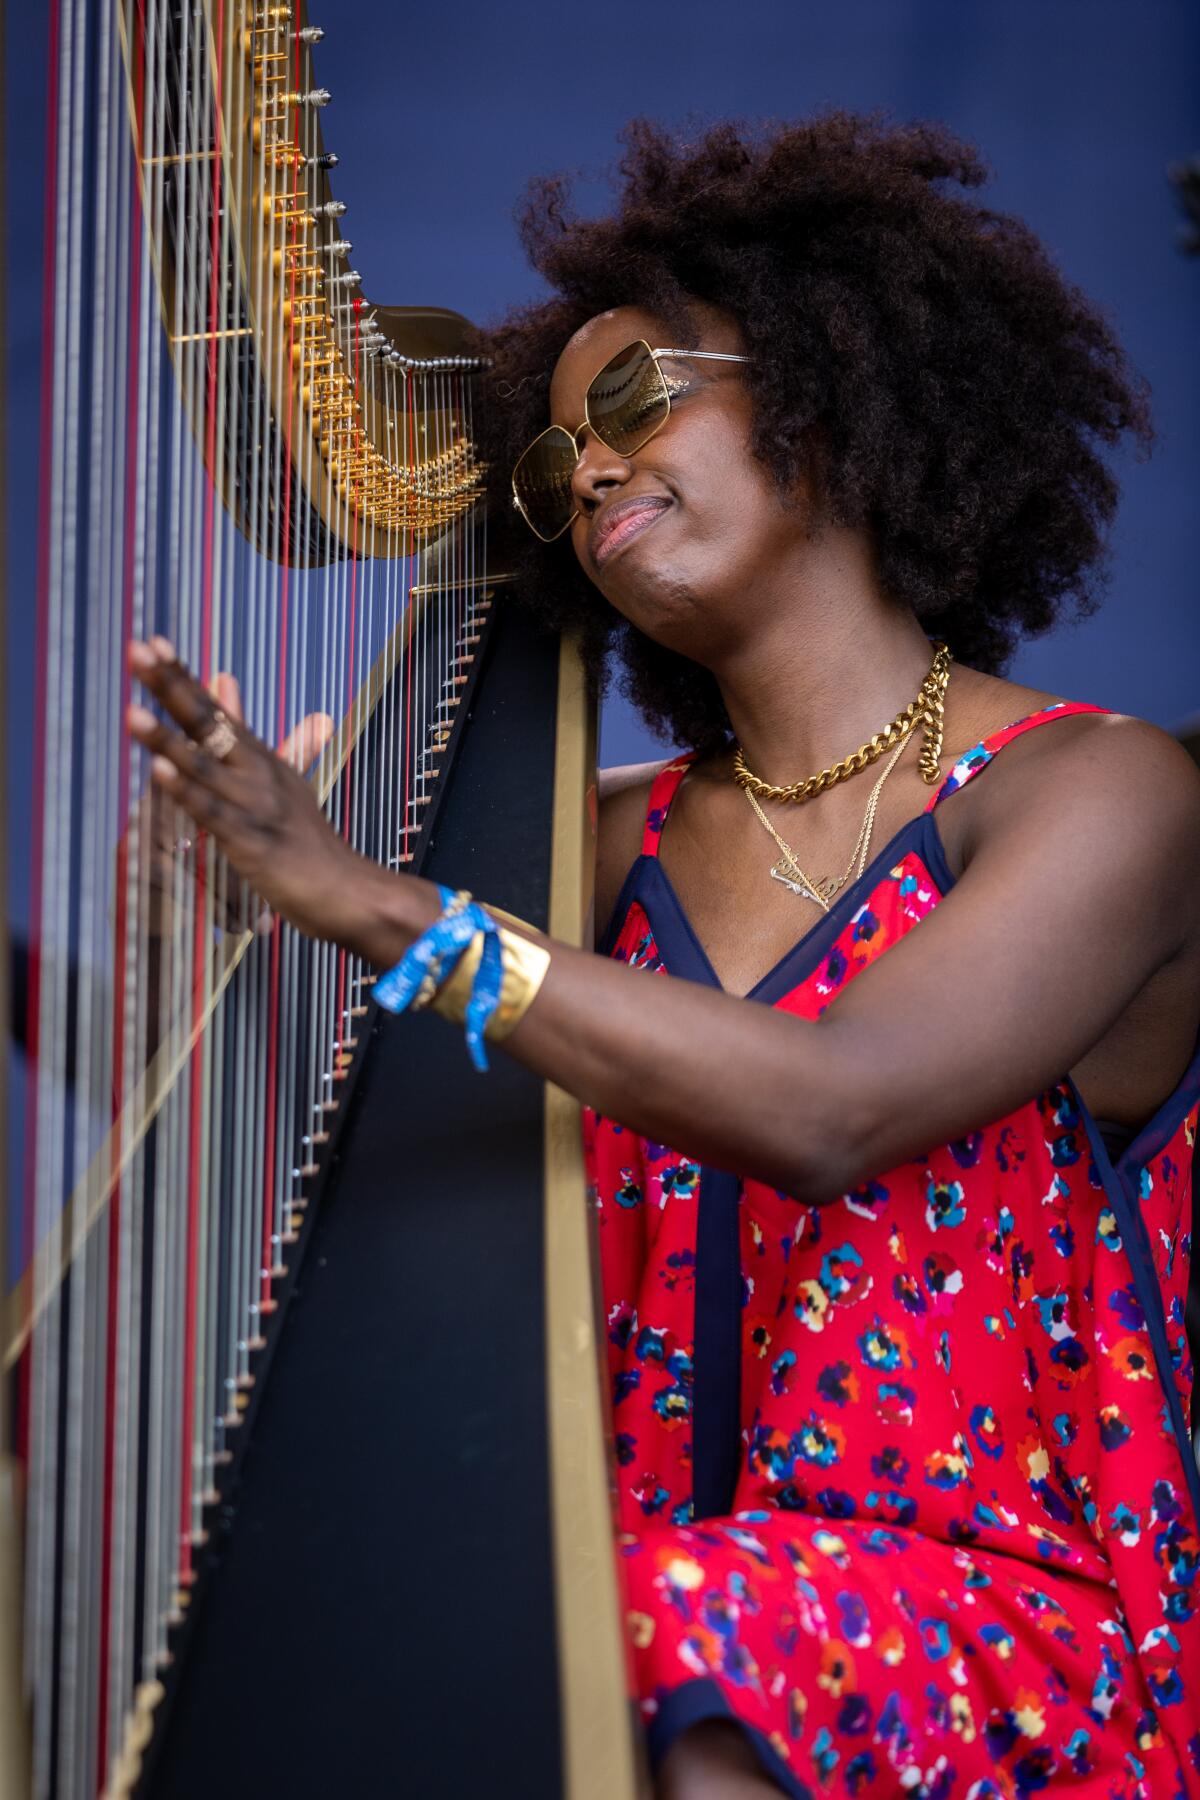 Harpist Brandee Younger at the 2022 Newport Jazz Festival in Rhode Island.